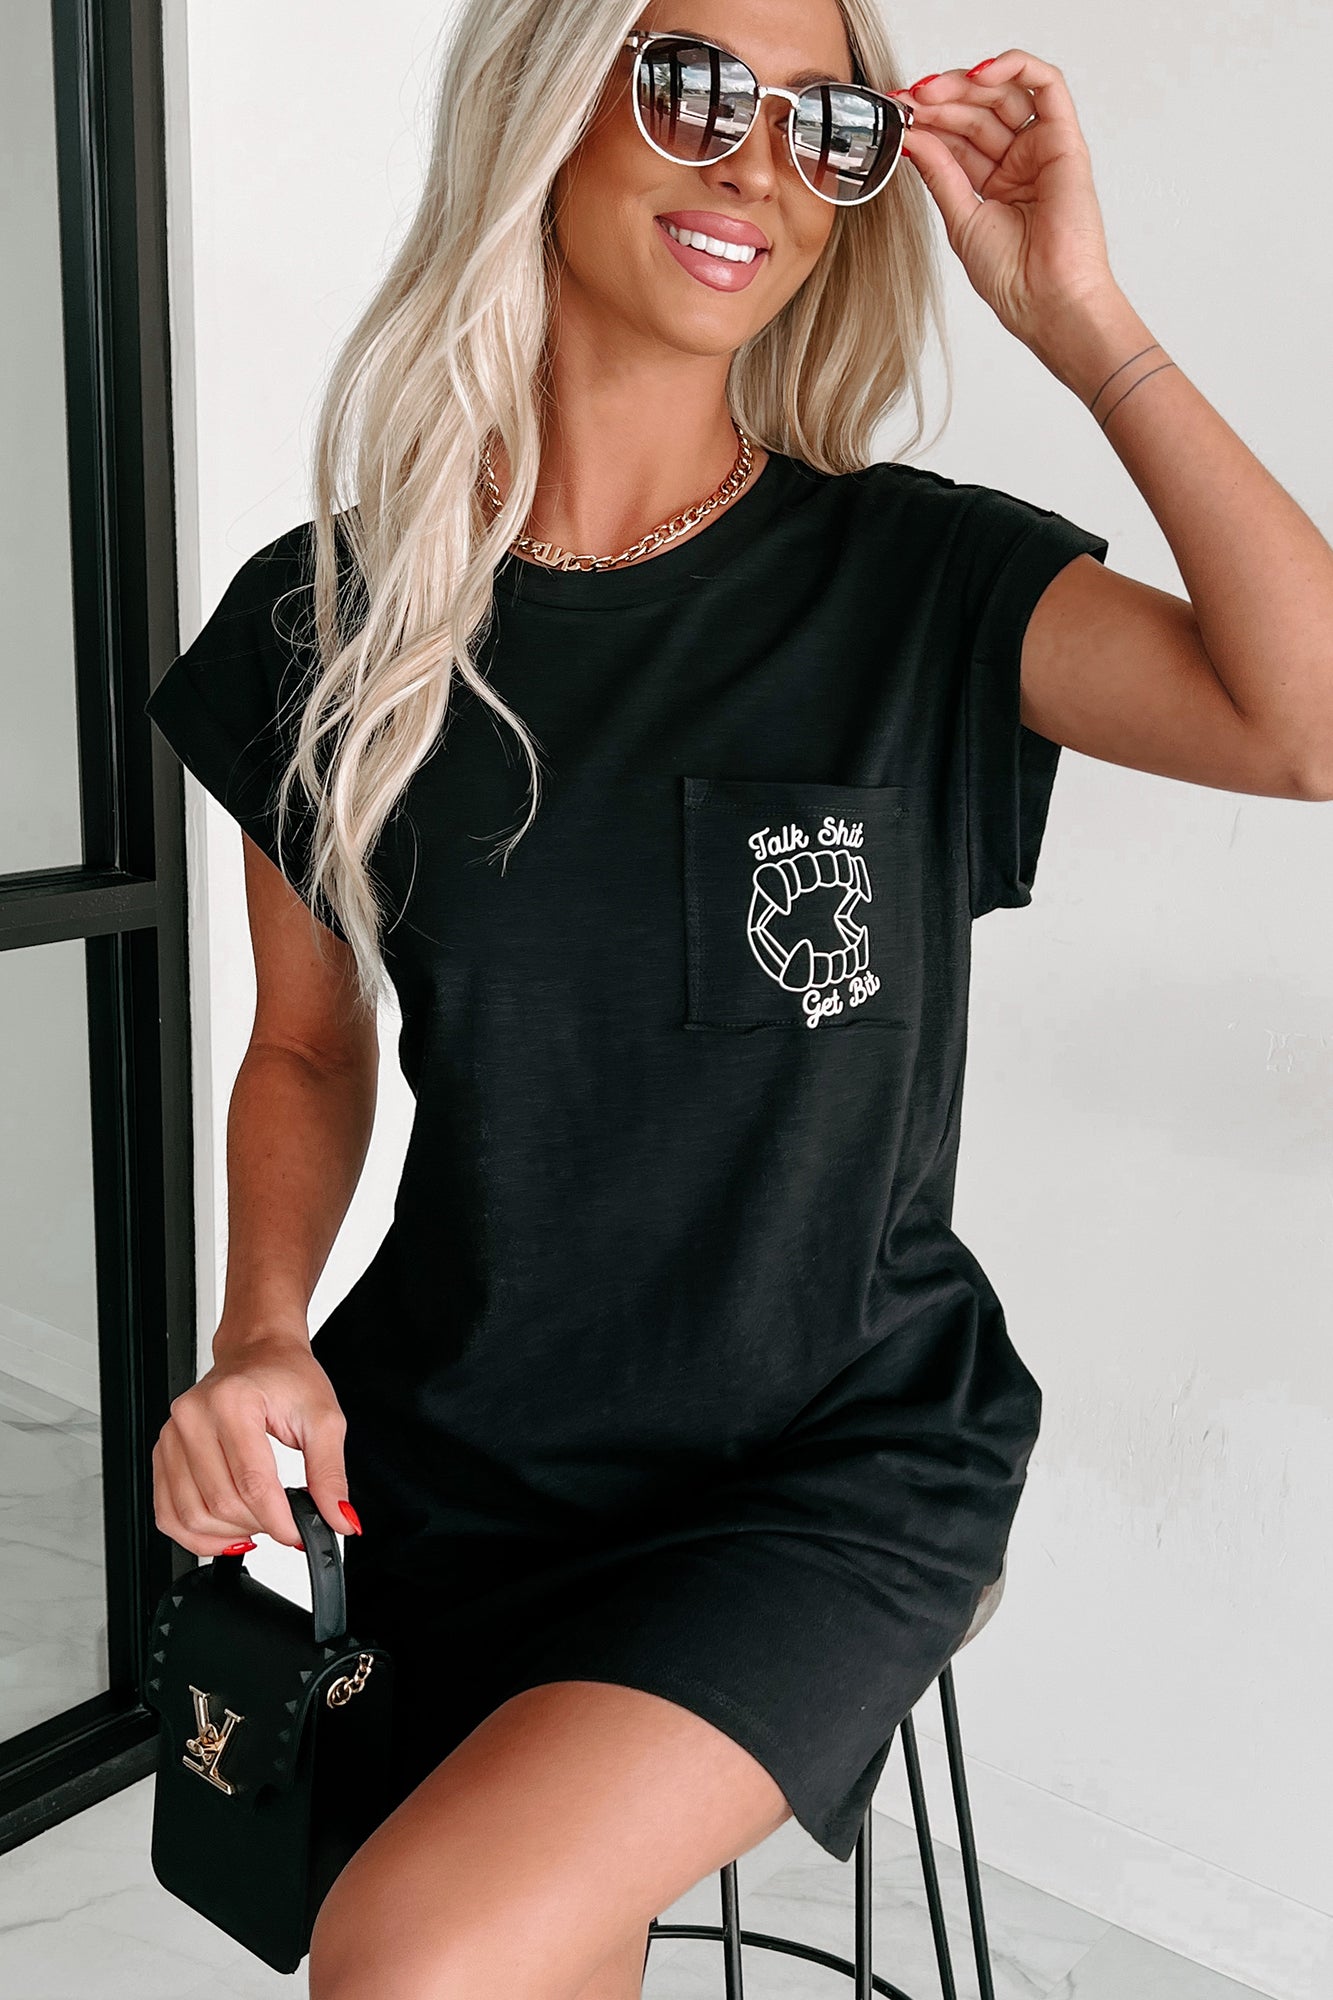 Doorbuster "Talk Shit Get Bit" Graphic T-Shirt Dress (Black) - Print On Demand - NanaMacs